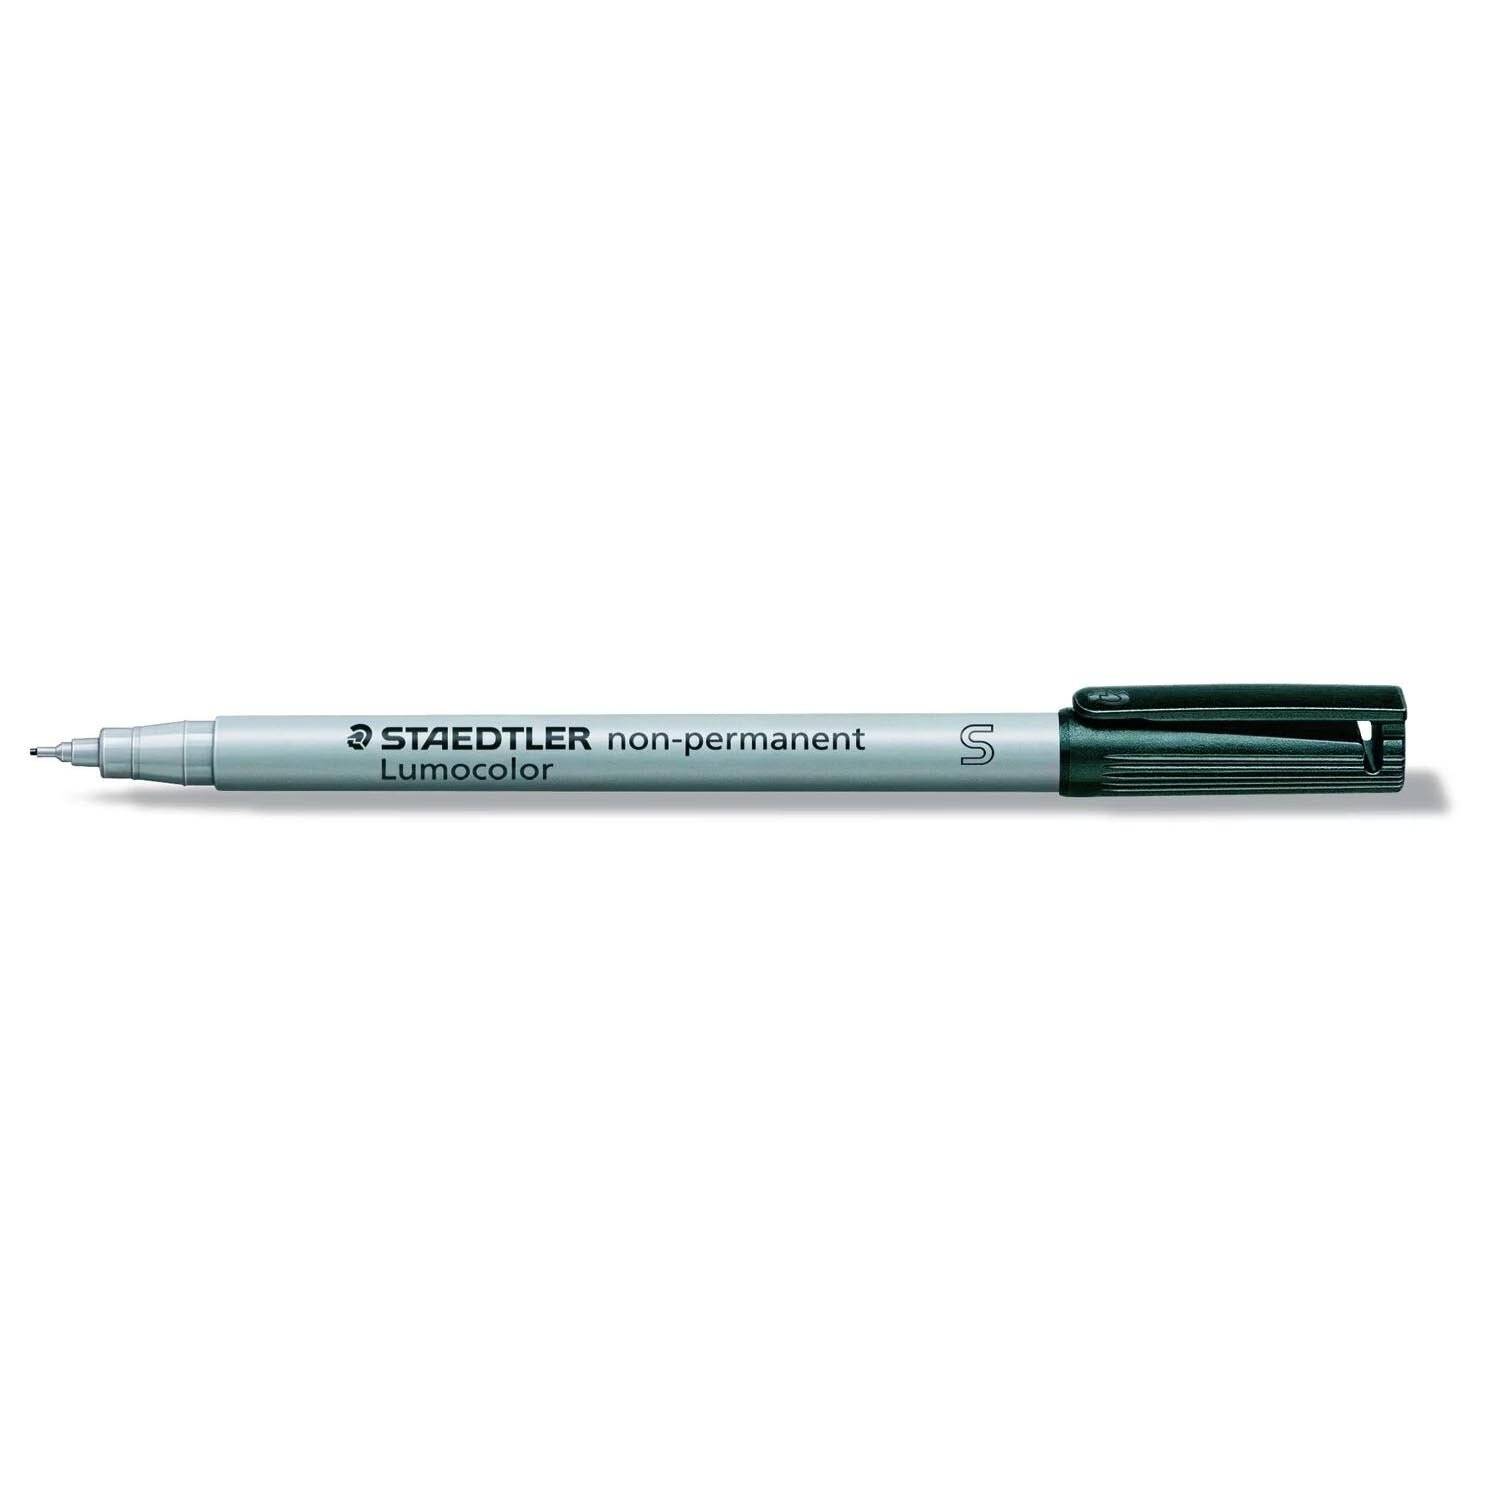 Staedtler Universal Pen Lumocolor Non-Permanent Pen